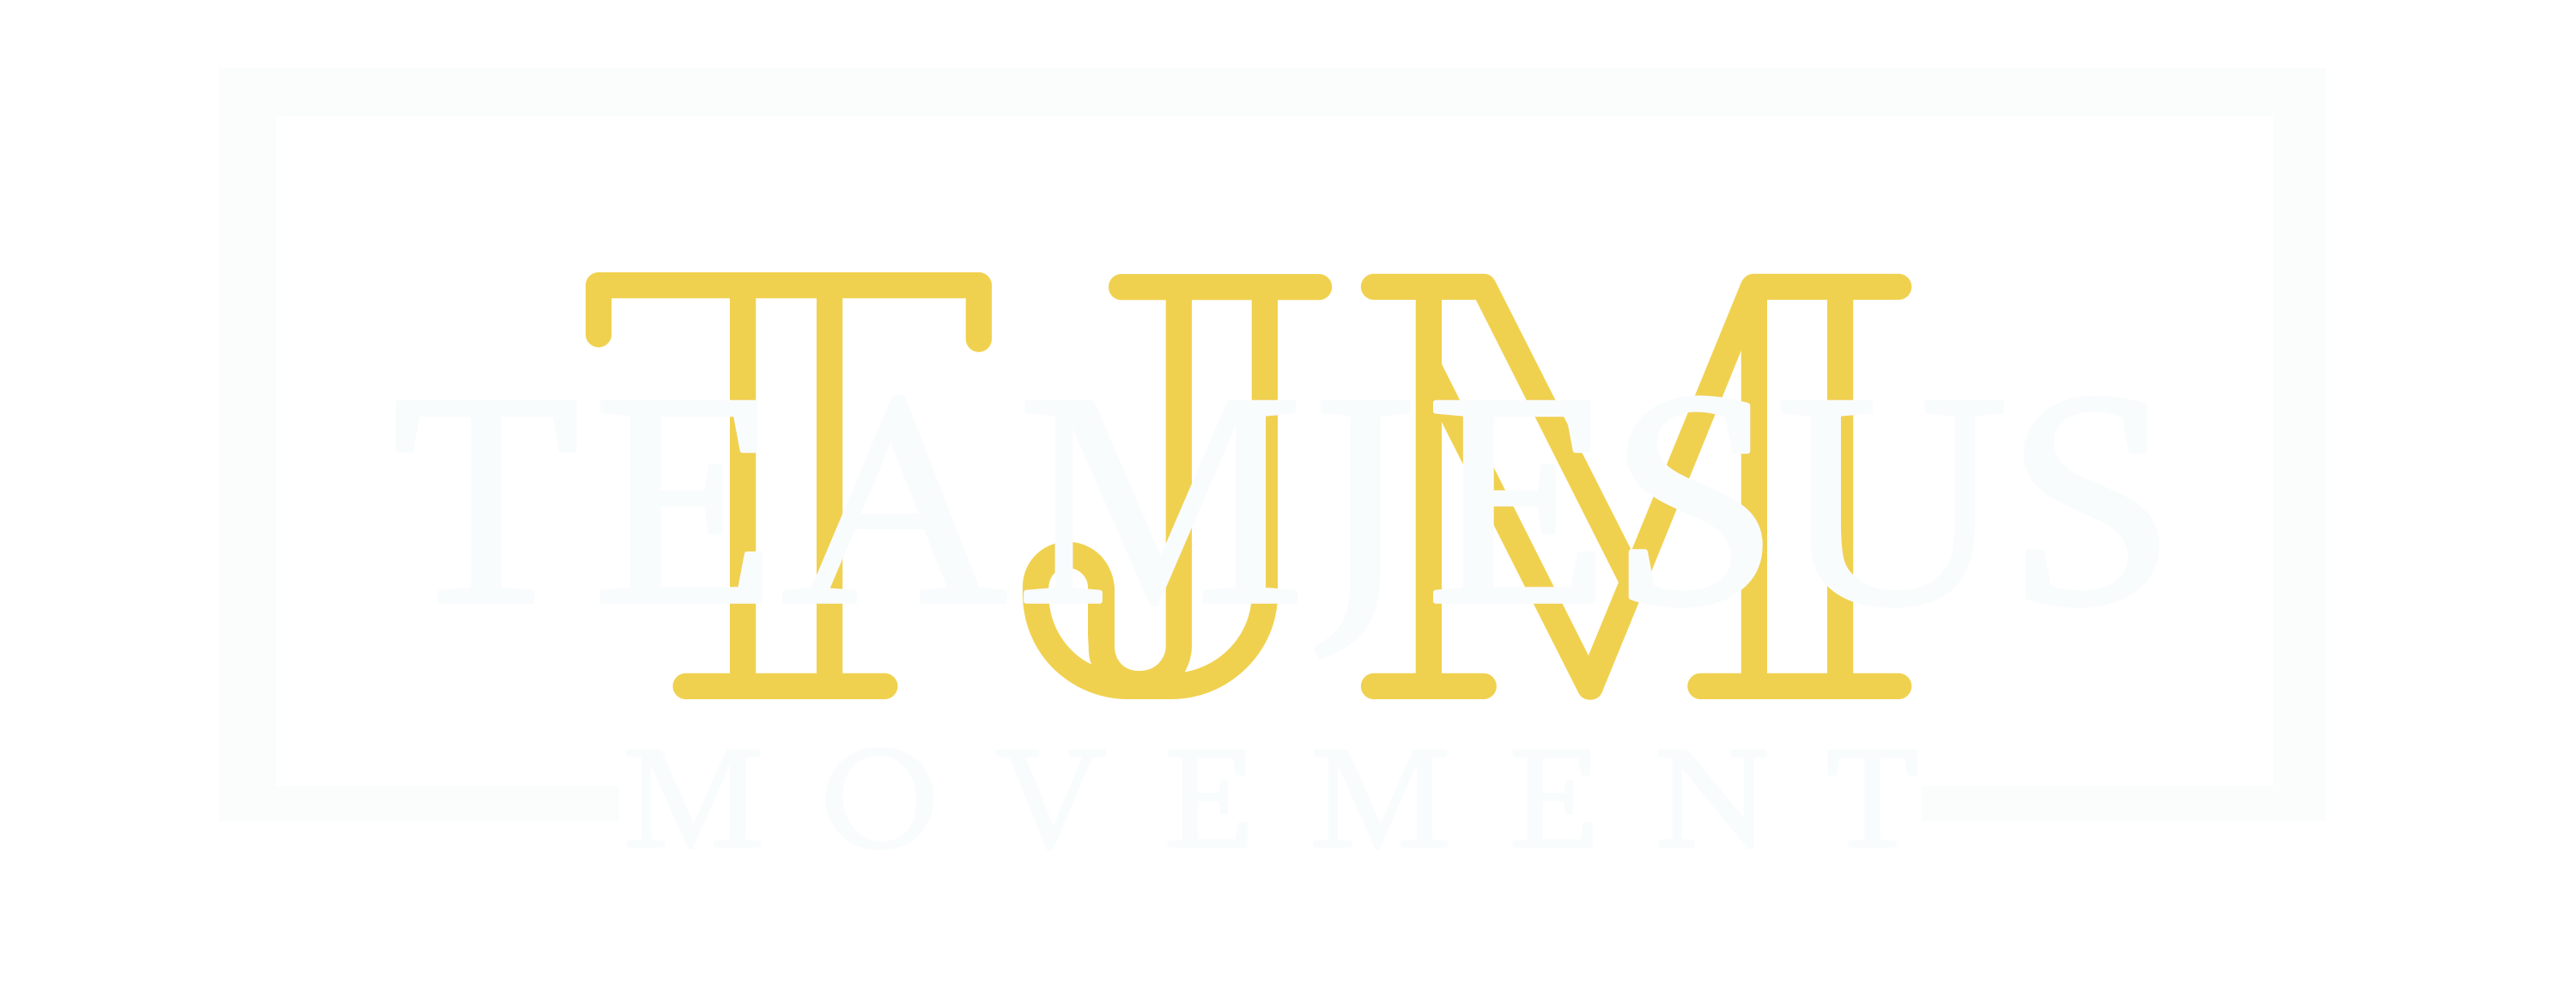 TeamJesus Movement